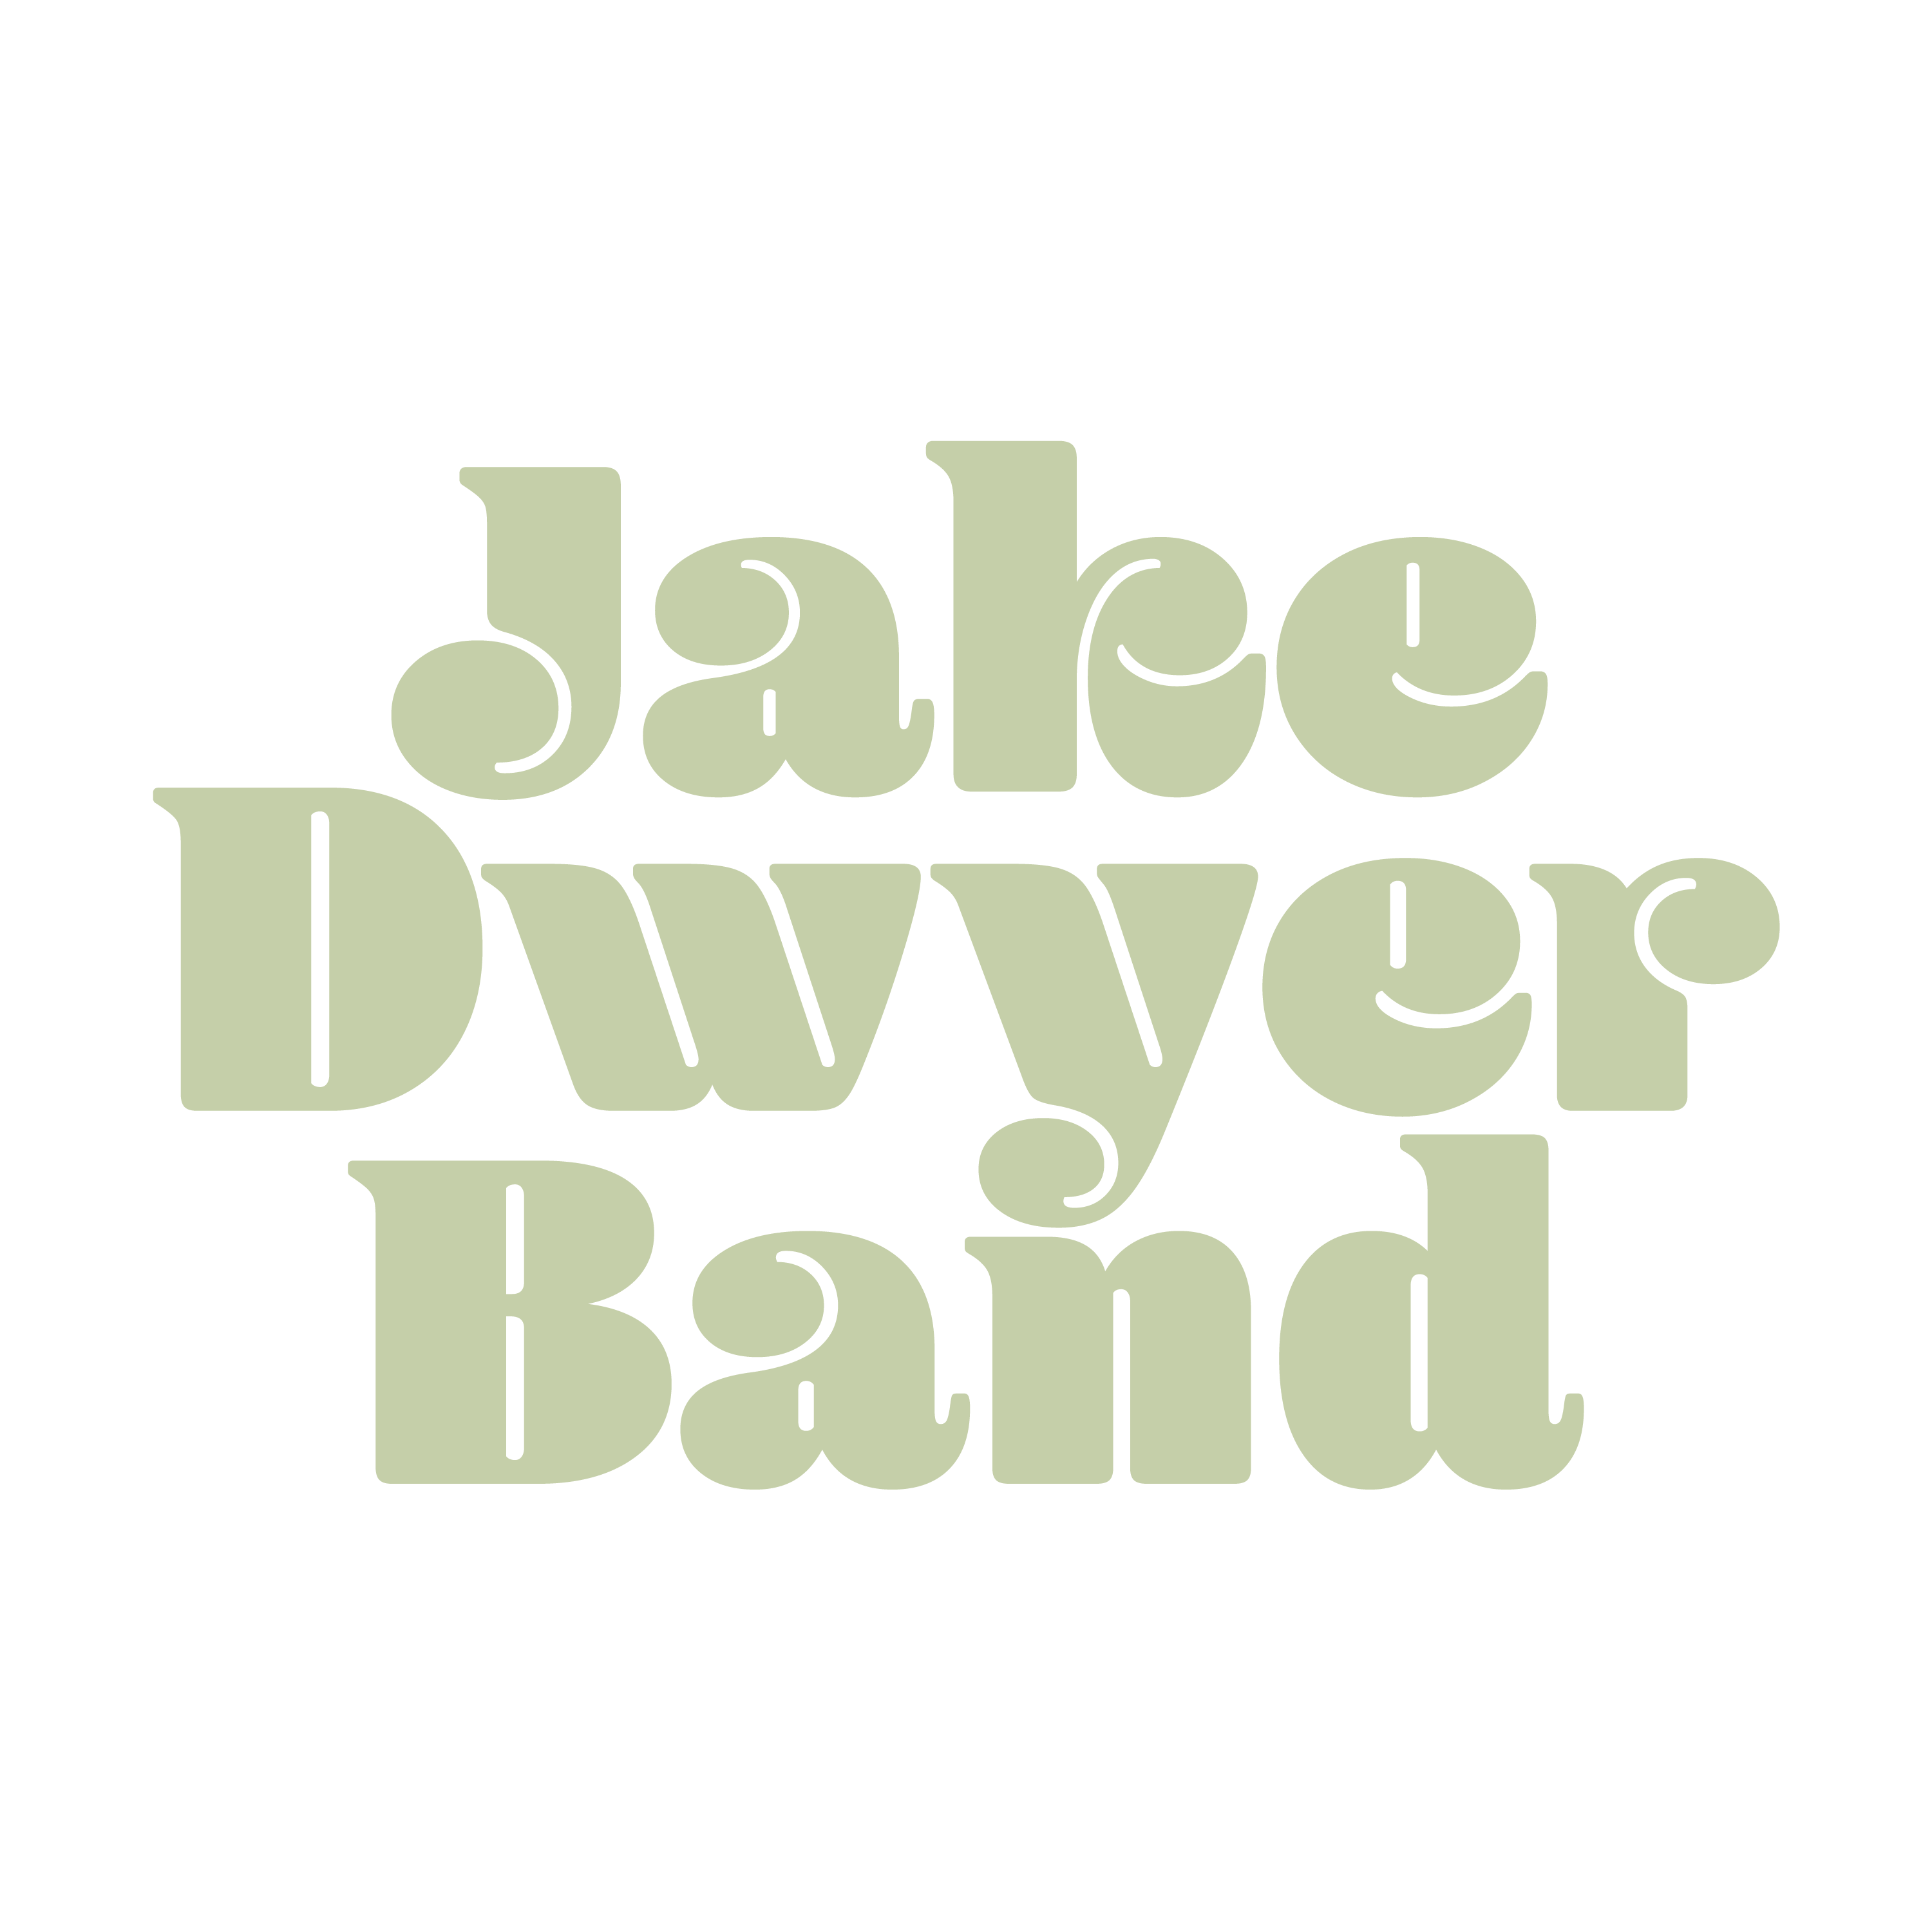 Jake Dwyer Band